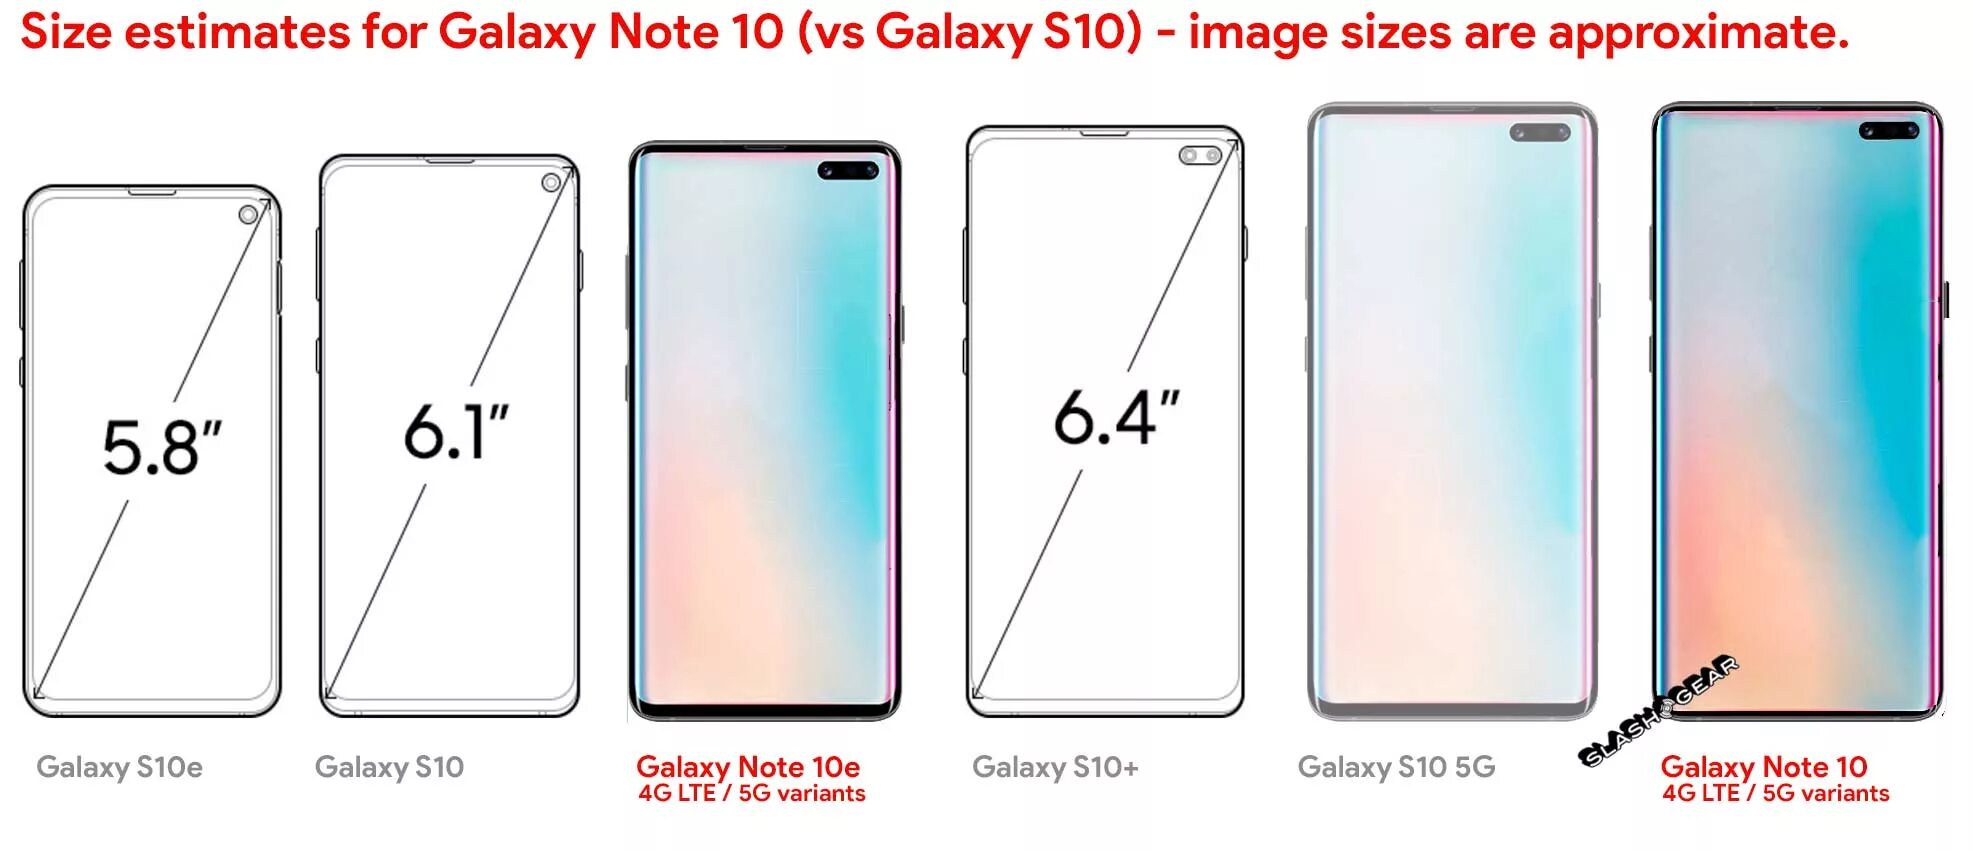 Длина телефона редми. Samsung Galaxy Note 10 размер дисплея. Galaxy Note 10 Plus габариты. Galaxy Note 10 Plus размер экрана. Самсунг галакси с 10 размер экрана.